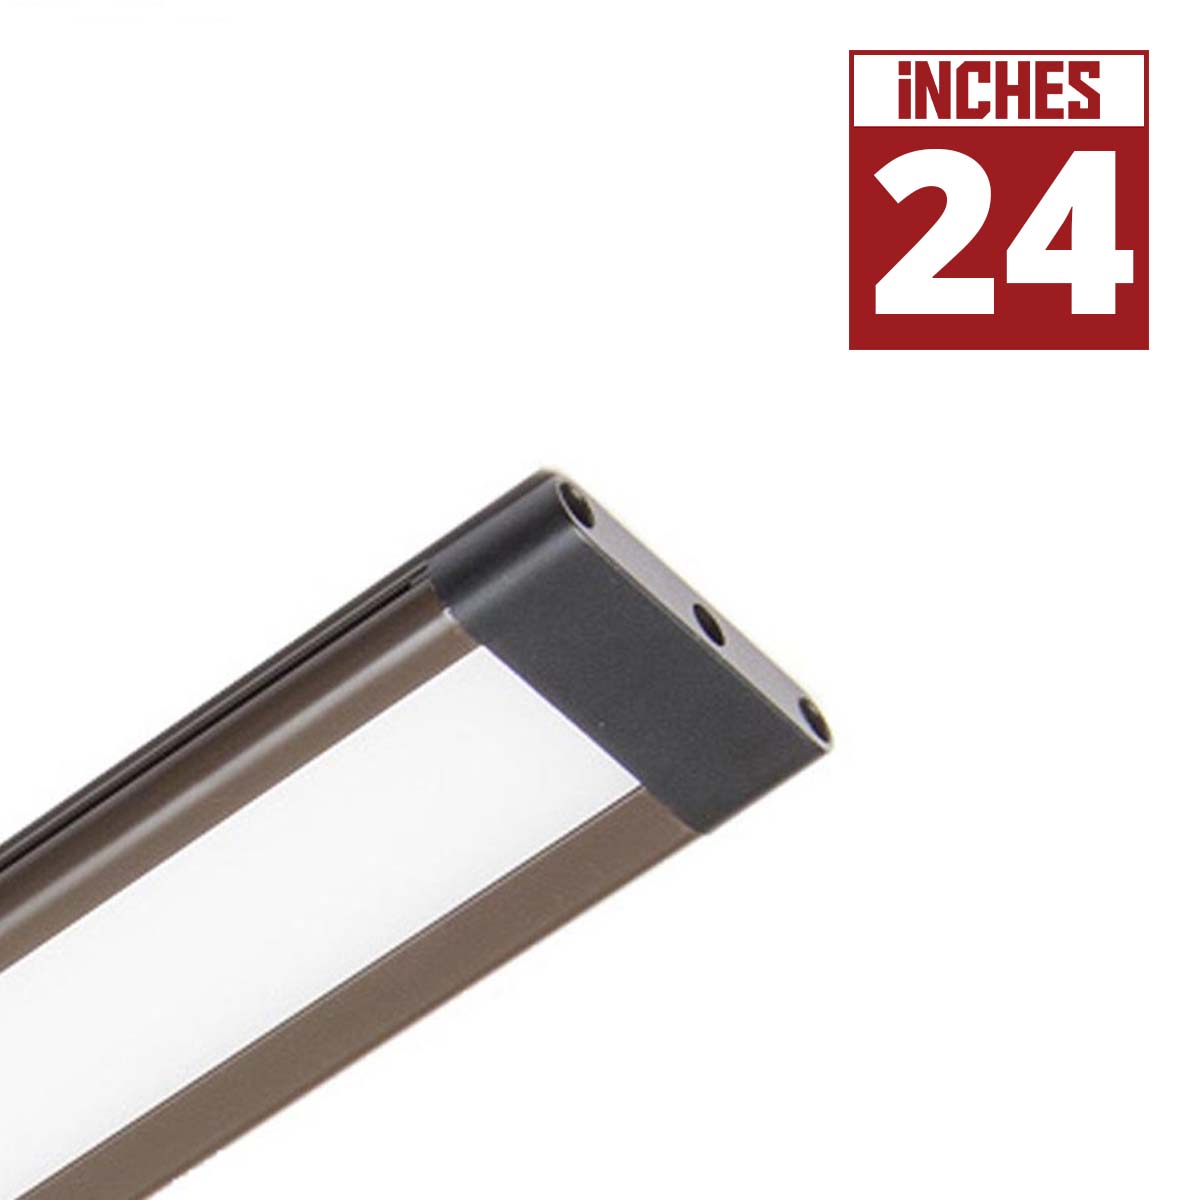 SlimEdge 24 Inch Plug In Under Cabinet LED Light, 550 Lumens, Linkable, 24V - Bees Lighting